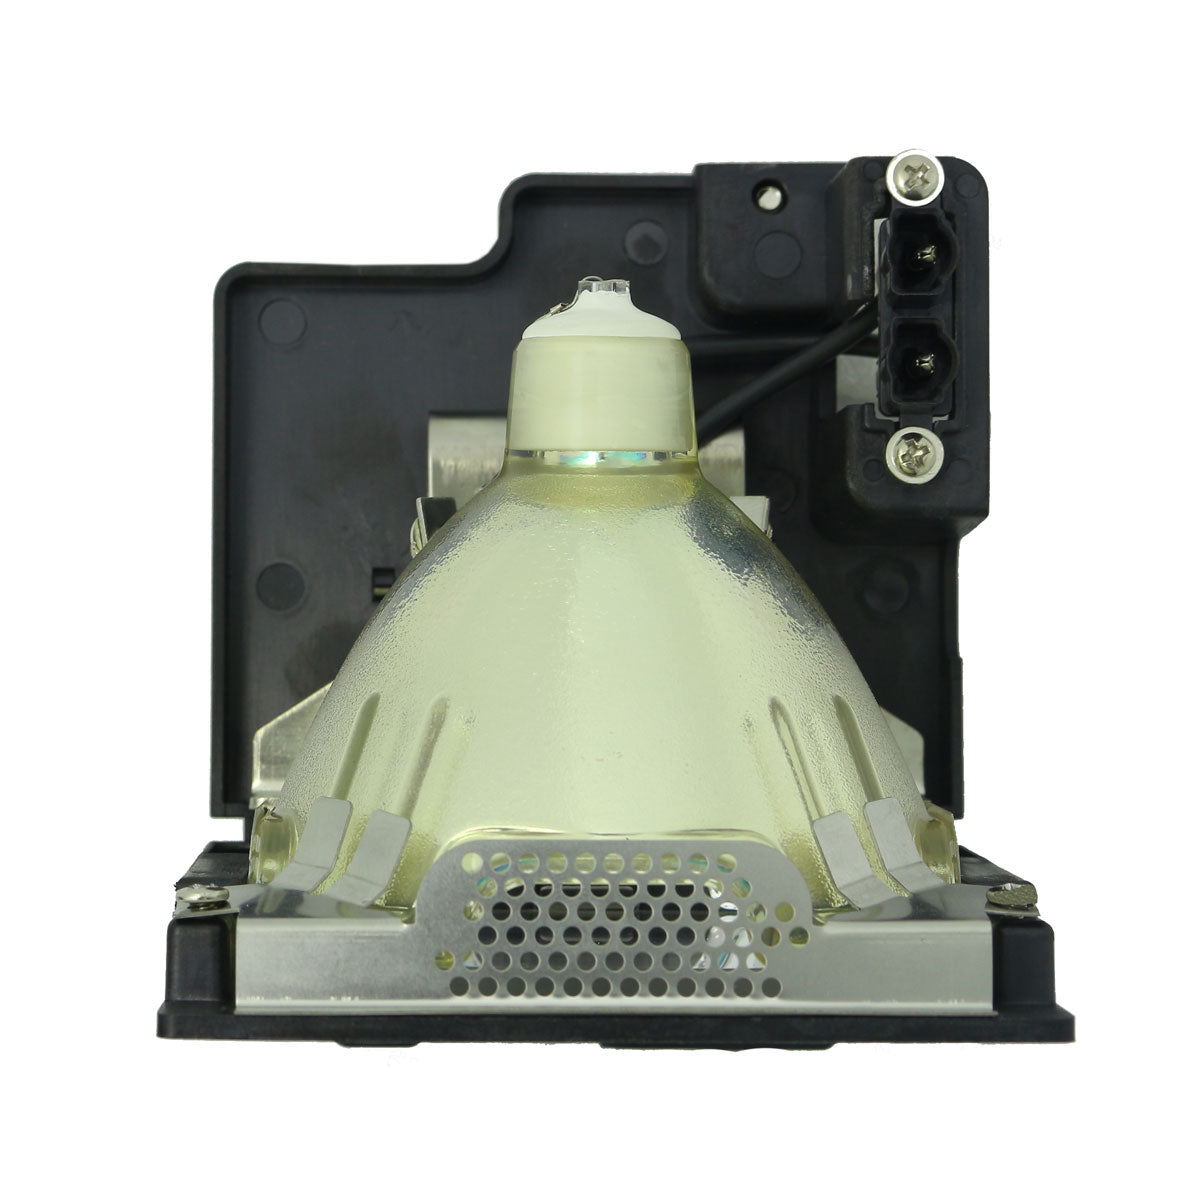 Sanyo POA-LLB02 Compatible Projector Lamp Module